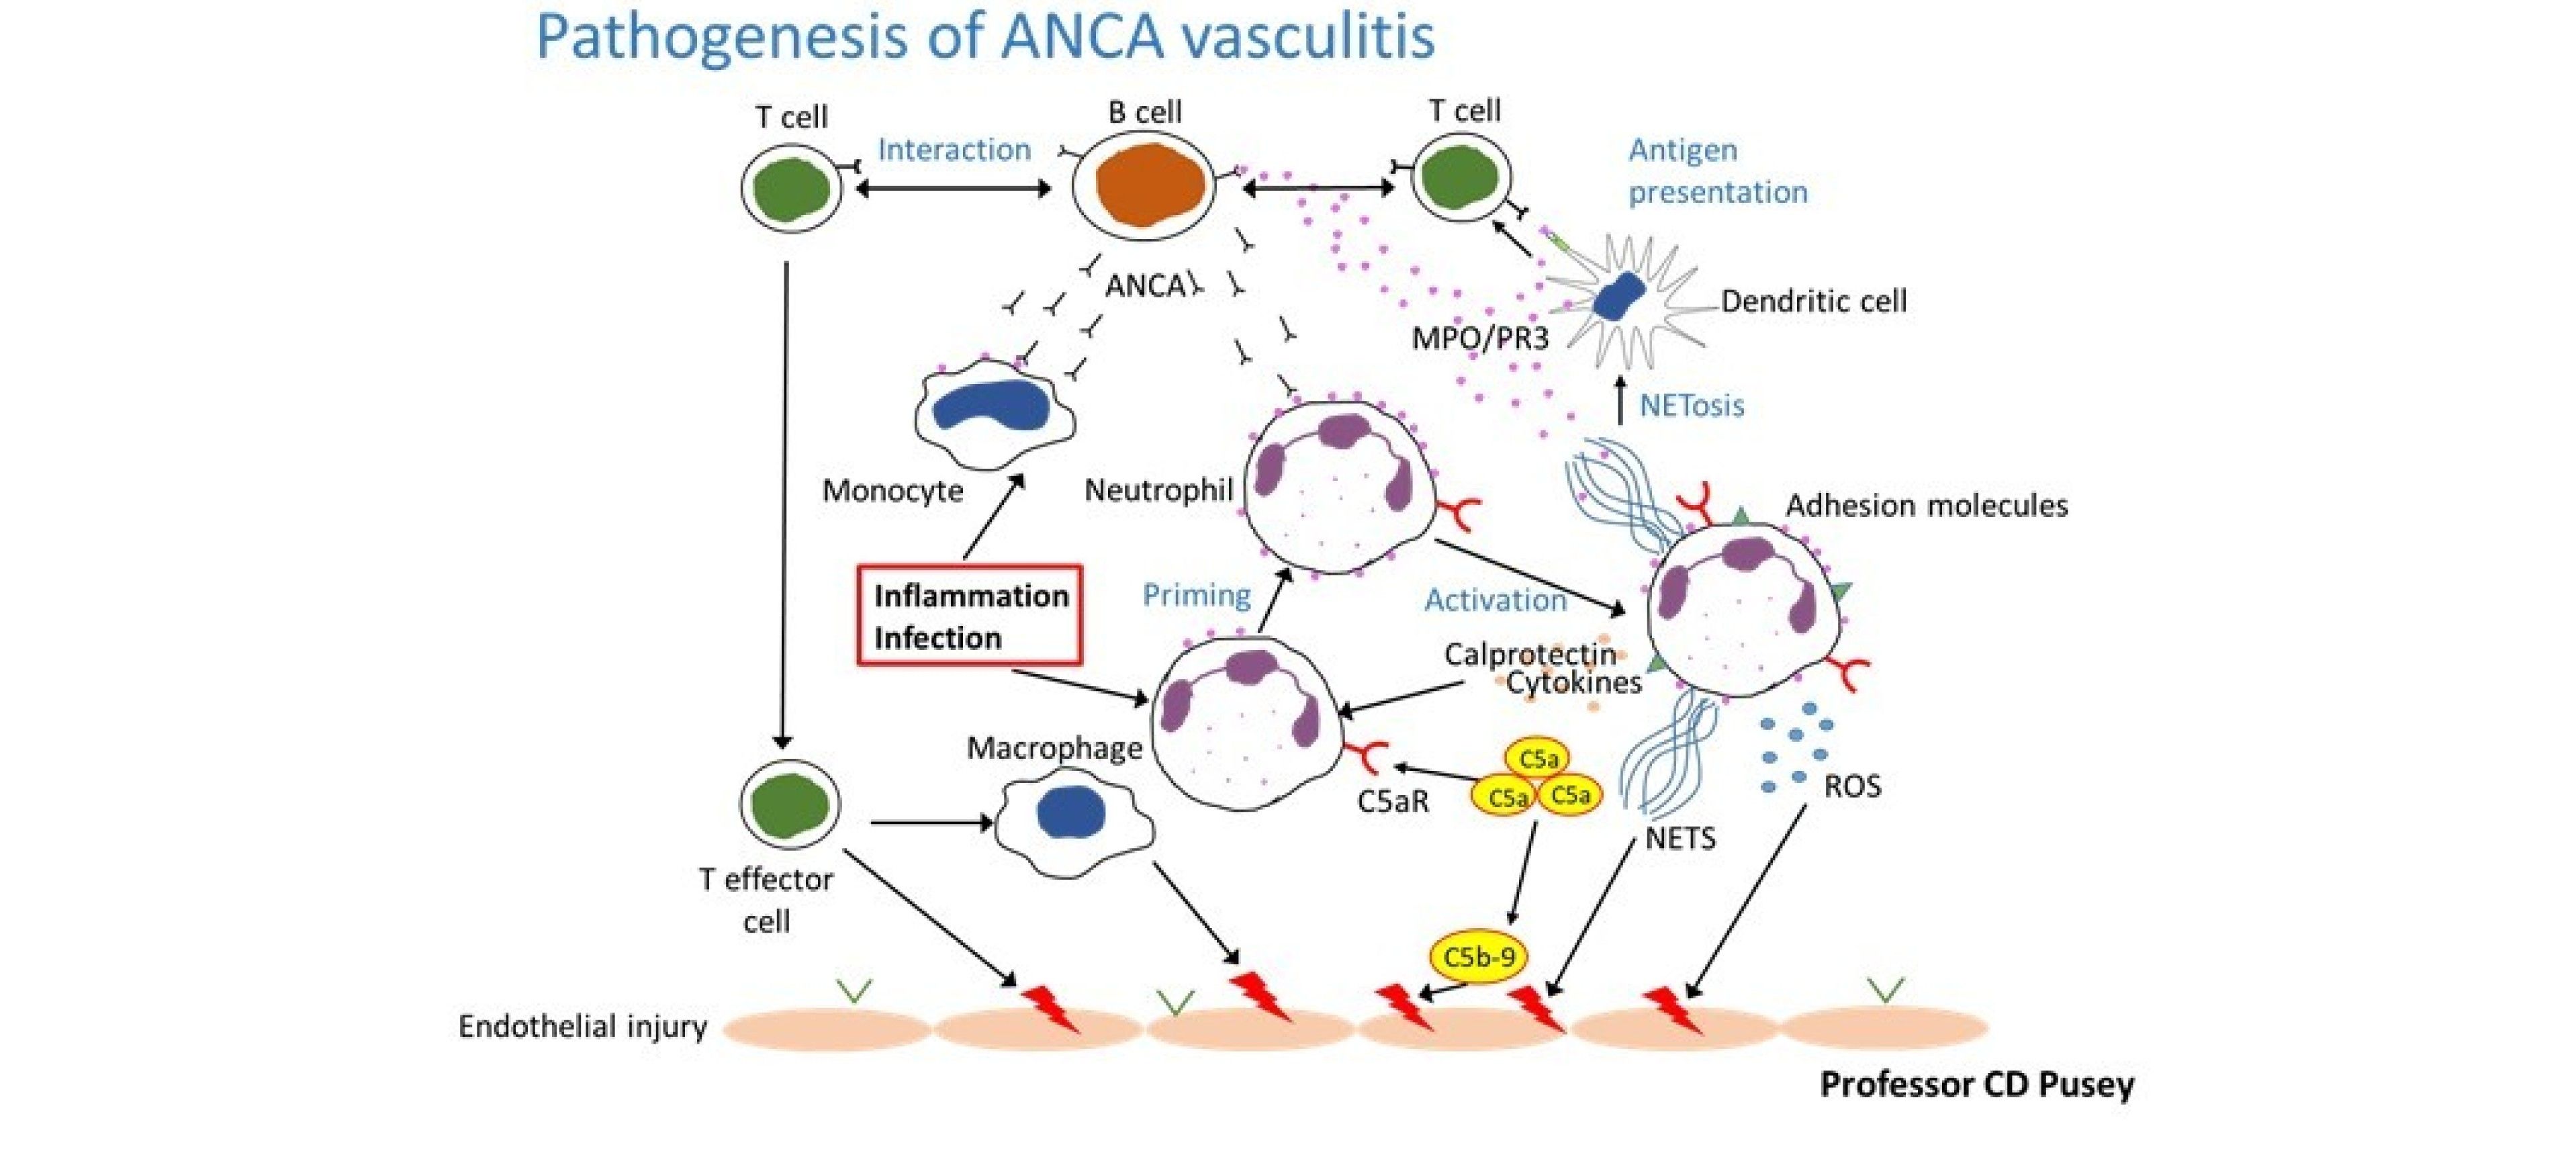 Pathogenesis of ANCA vasculitis